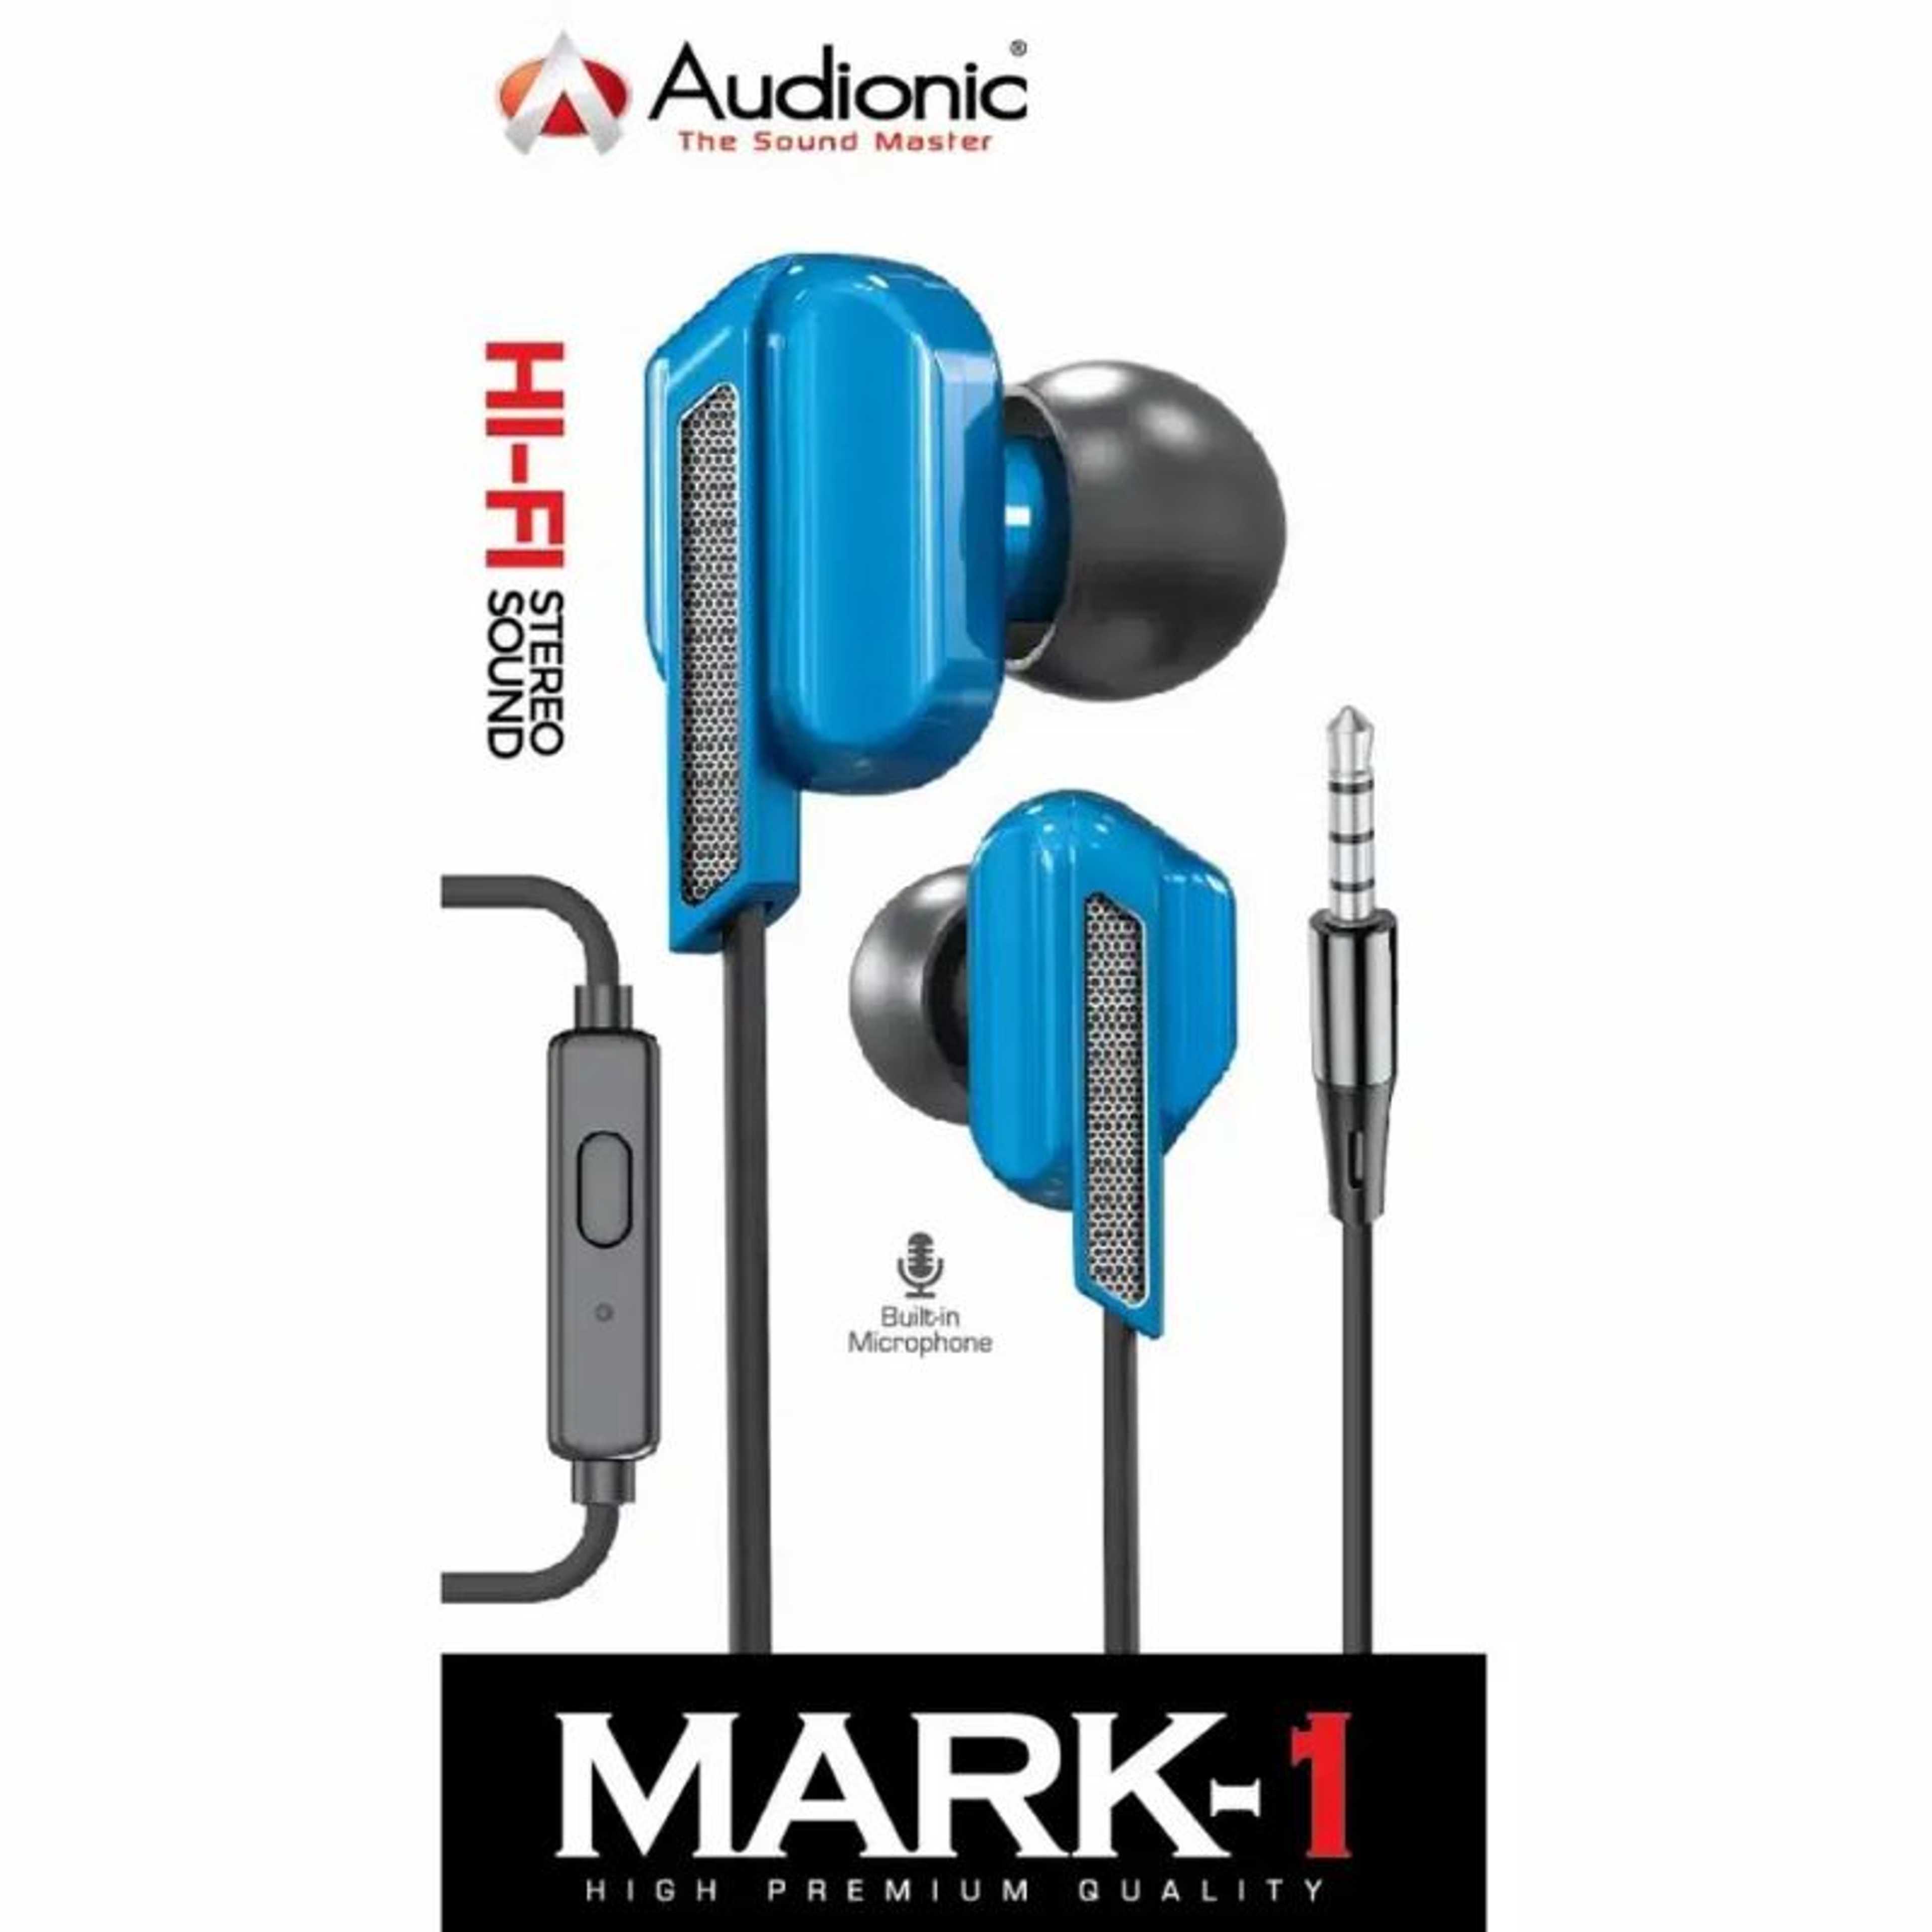 Audionic MARK-1 High Premium Quality Handsfree/Earphone